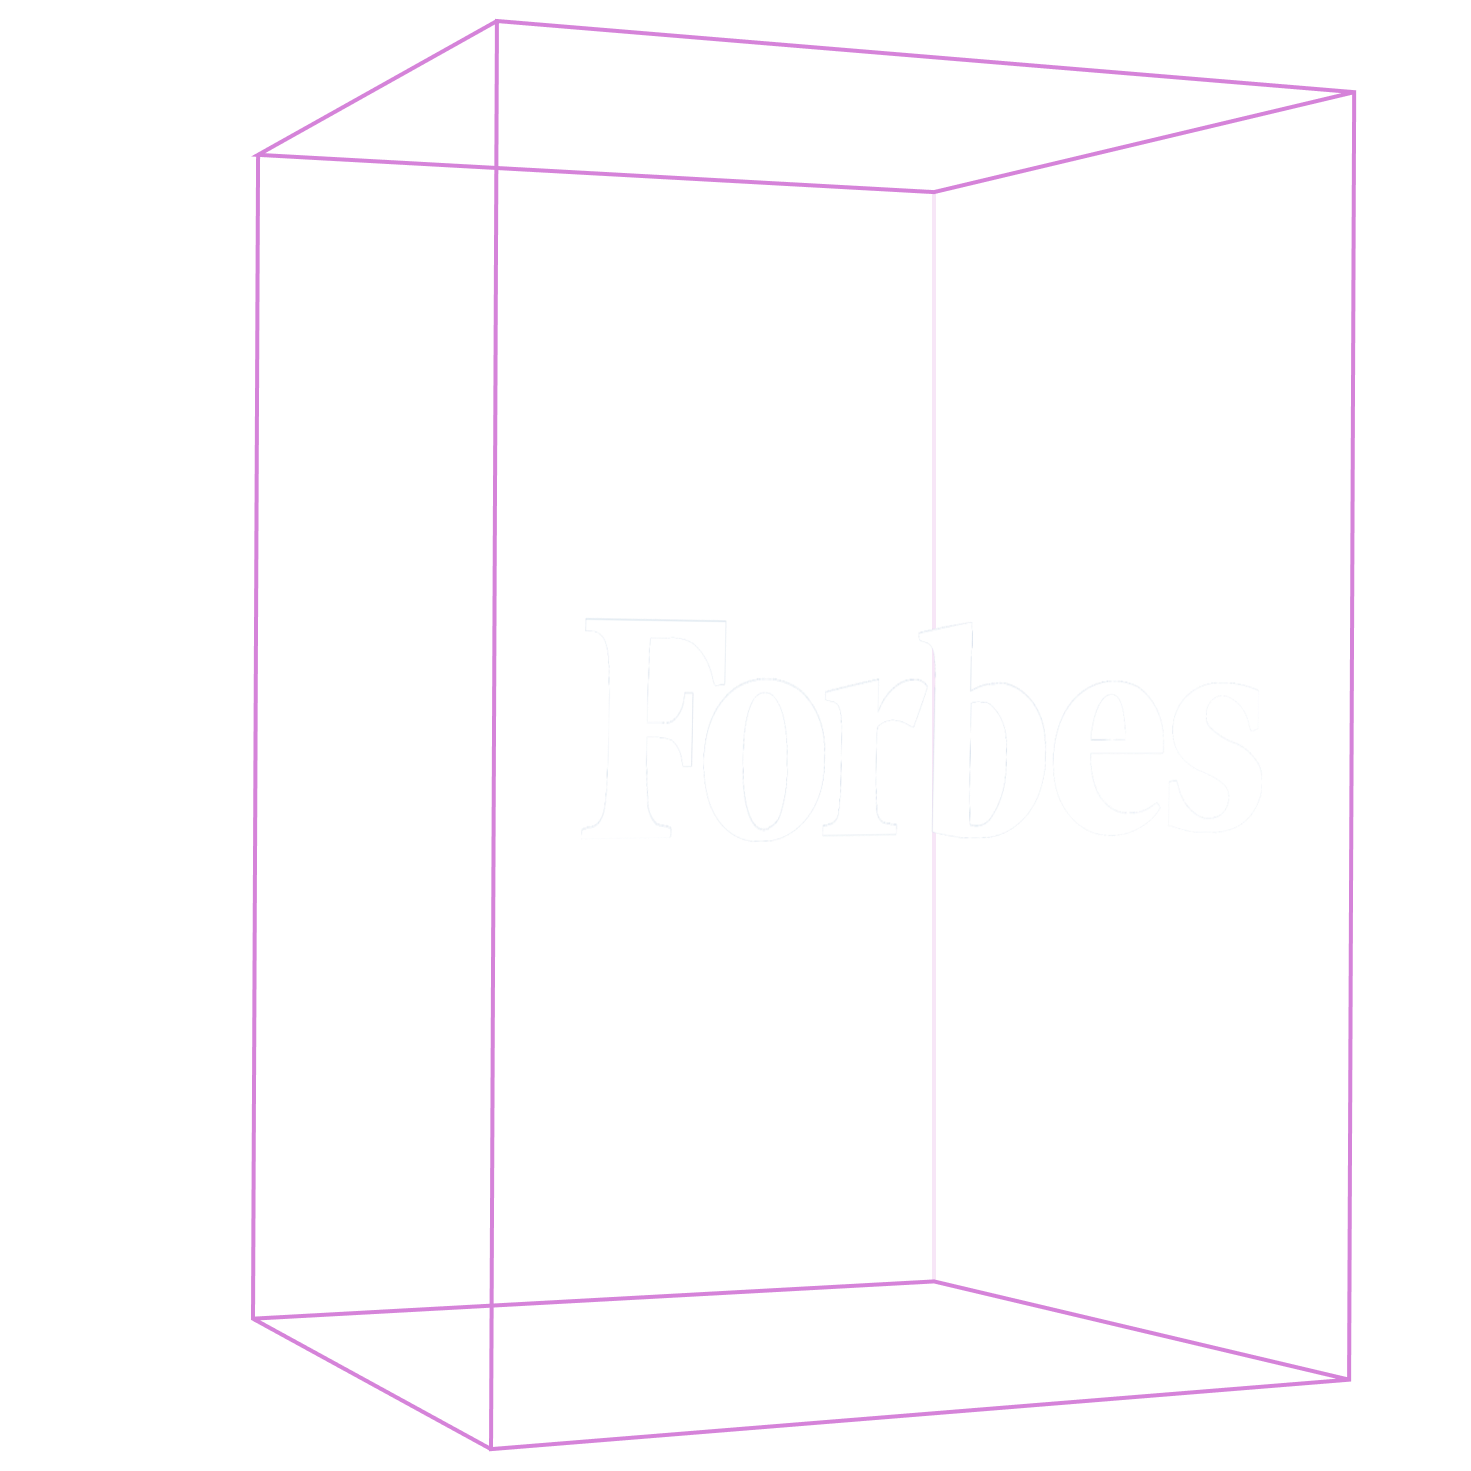 forbes logo inside transparent pink cube